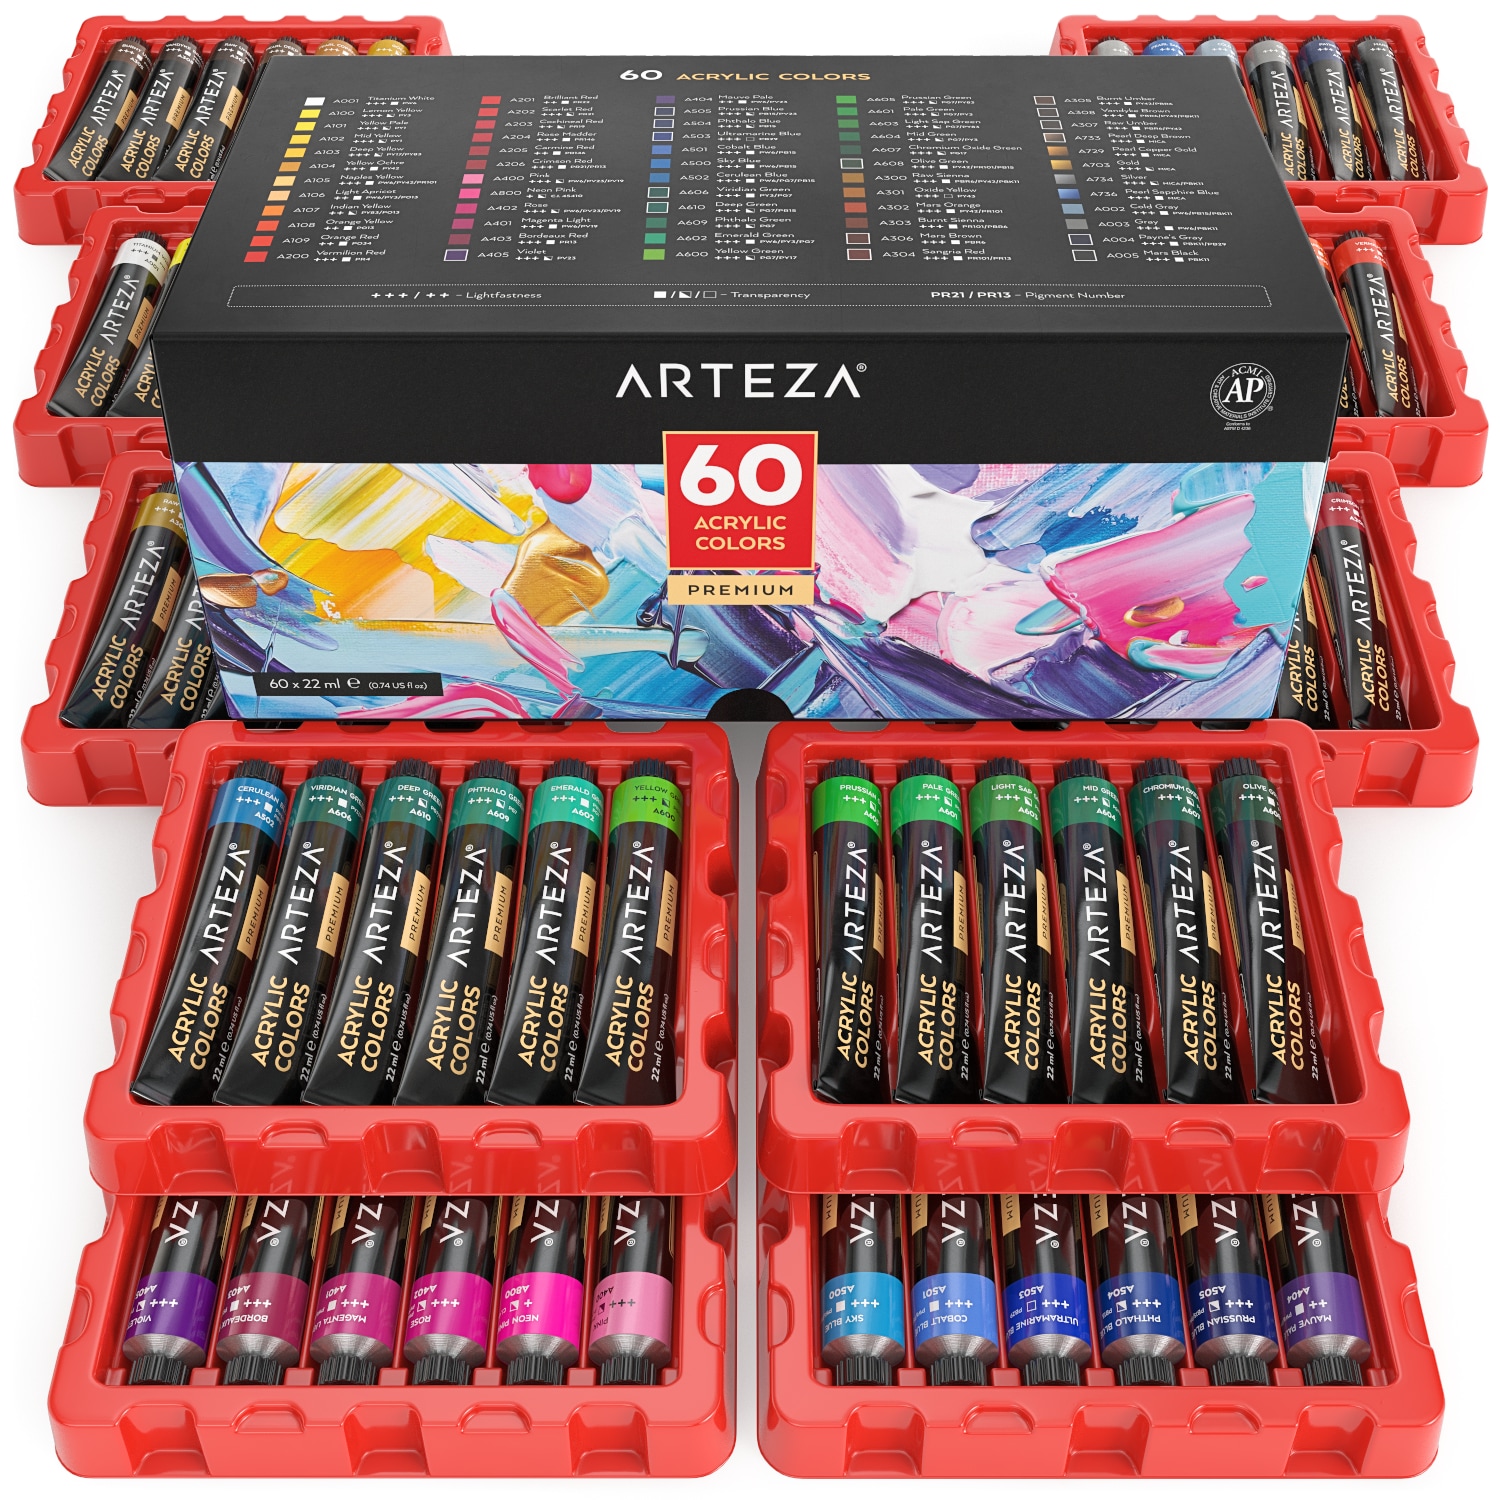 ARTEZA Multi-colored Acrylic Paint at